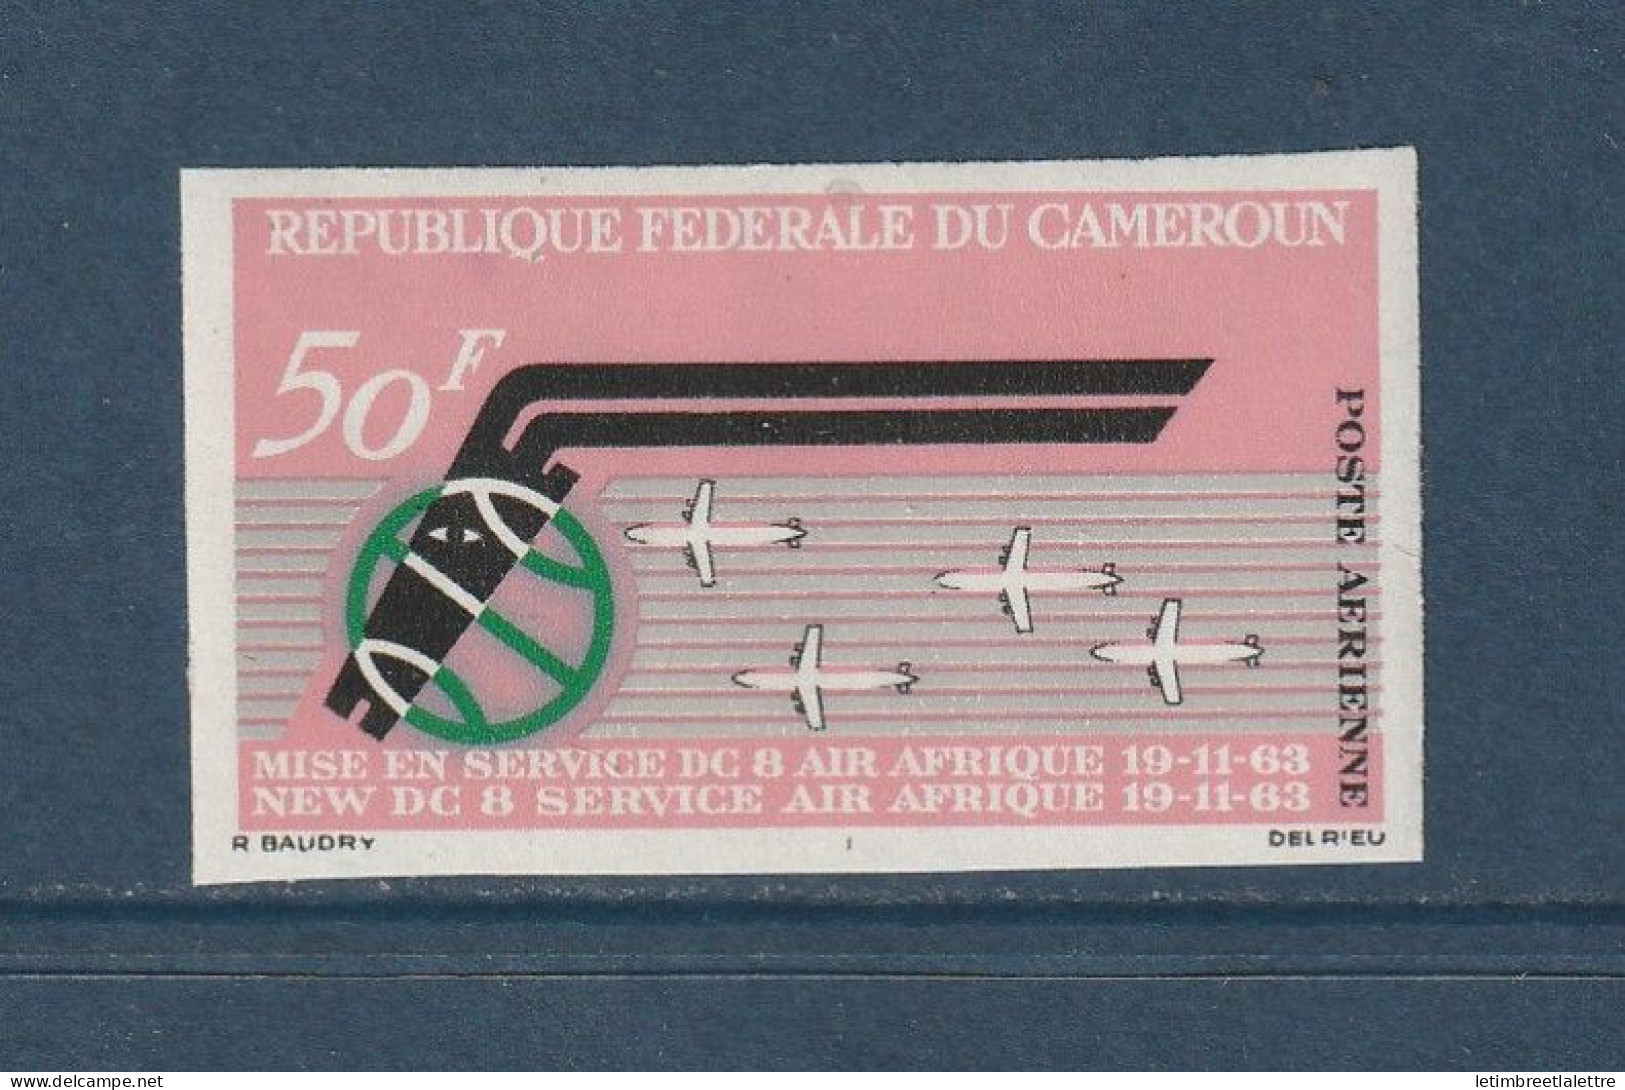 Cameroun - Poste Aérienne - Non Dentelé - YT N° 60 ** - Neuf Sans Charnière - 1963 - Posta Aerea